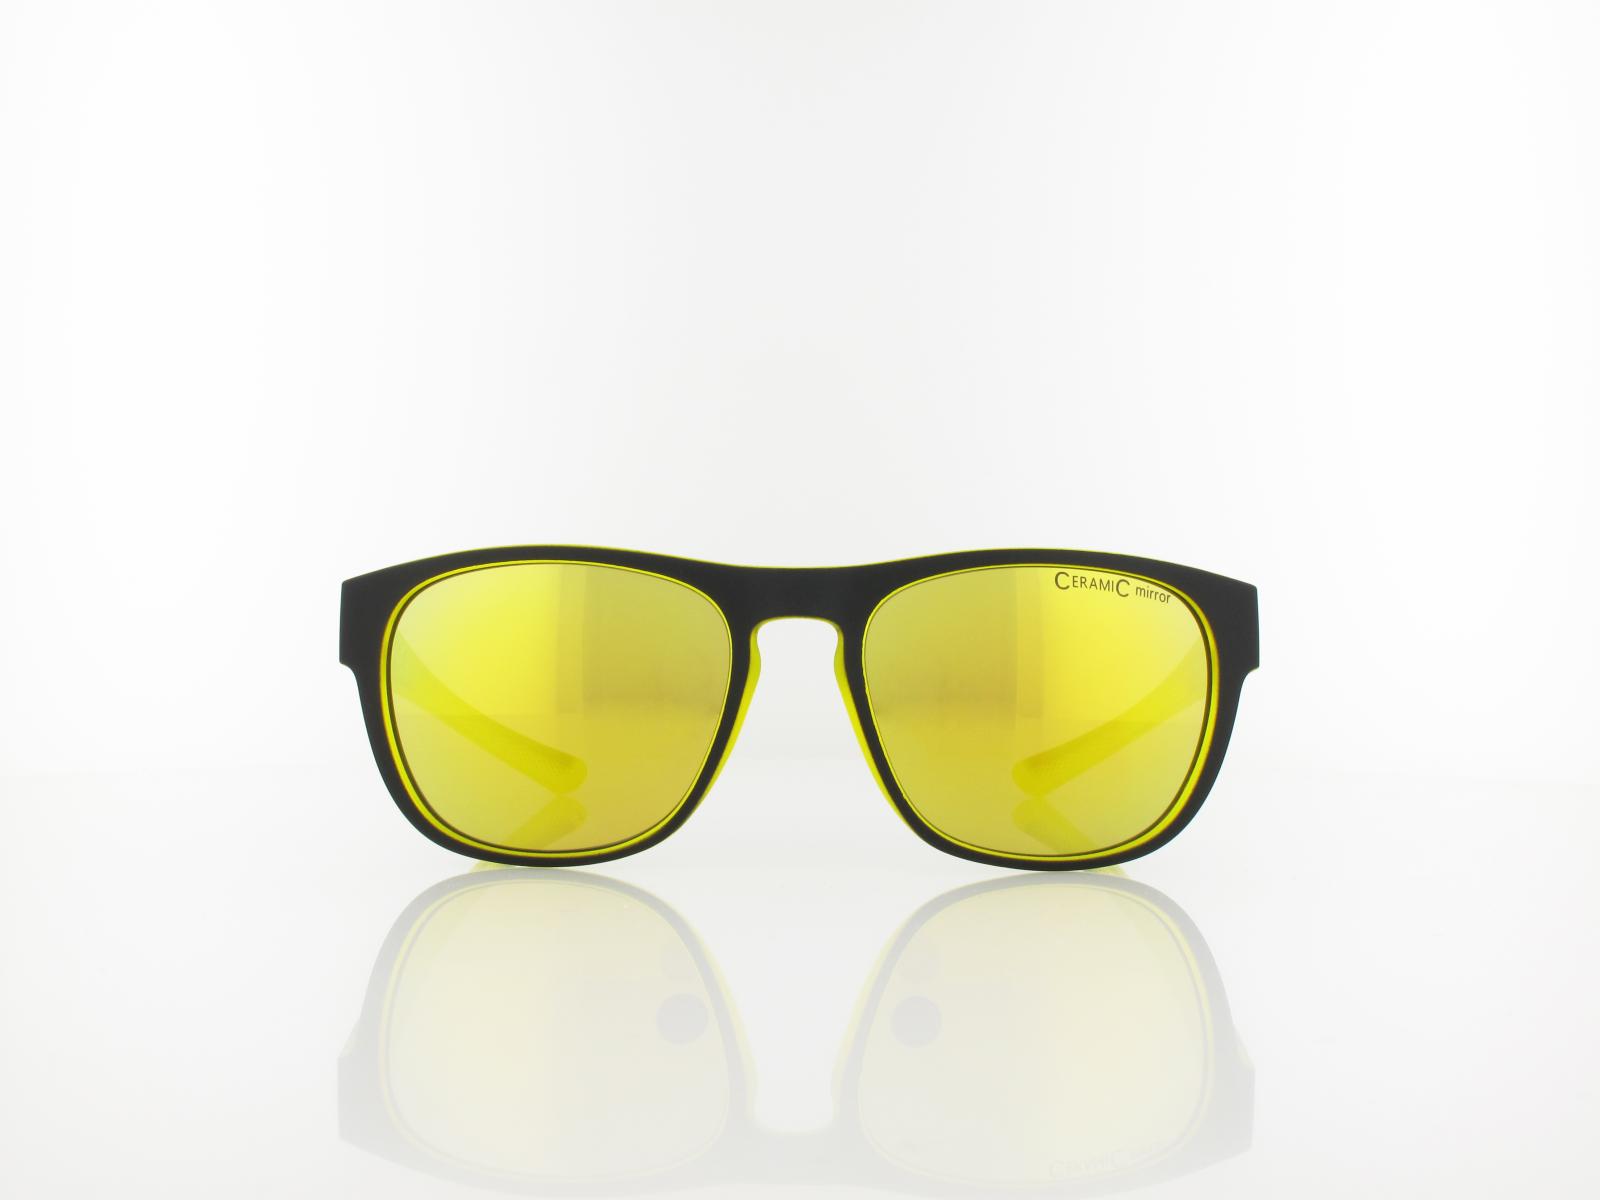 ALPINA | Lino II A8665 333 55 | black neon transparent matt / neon yellow mirror